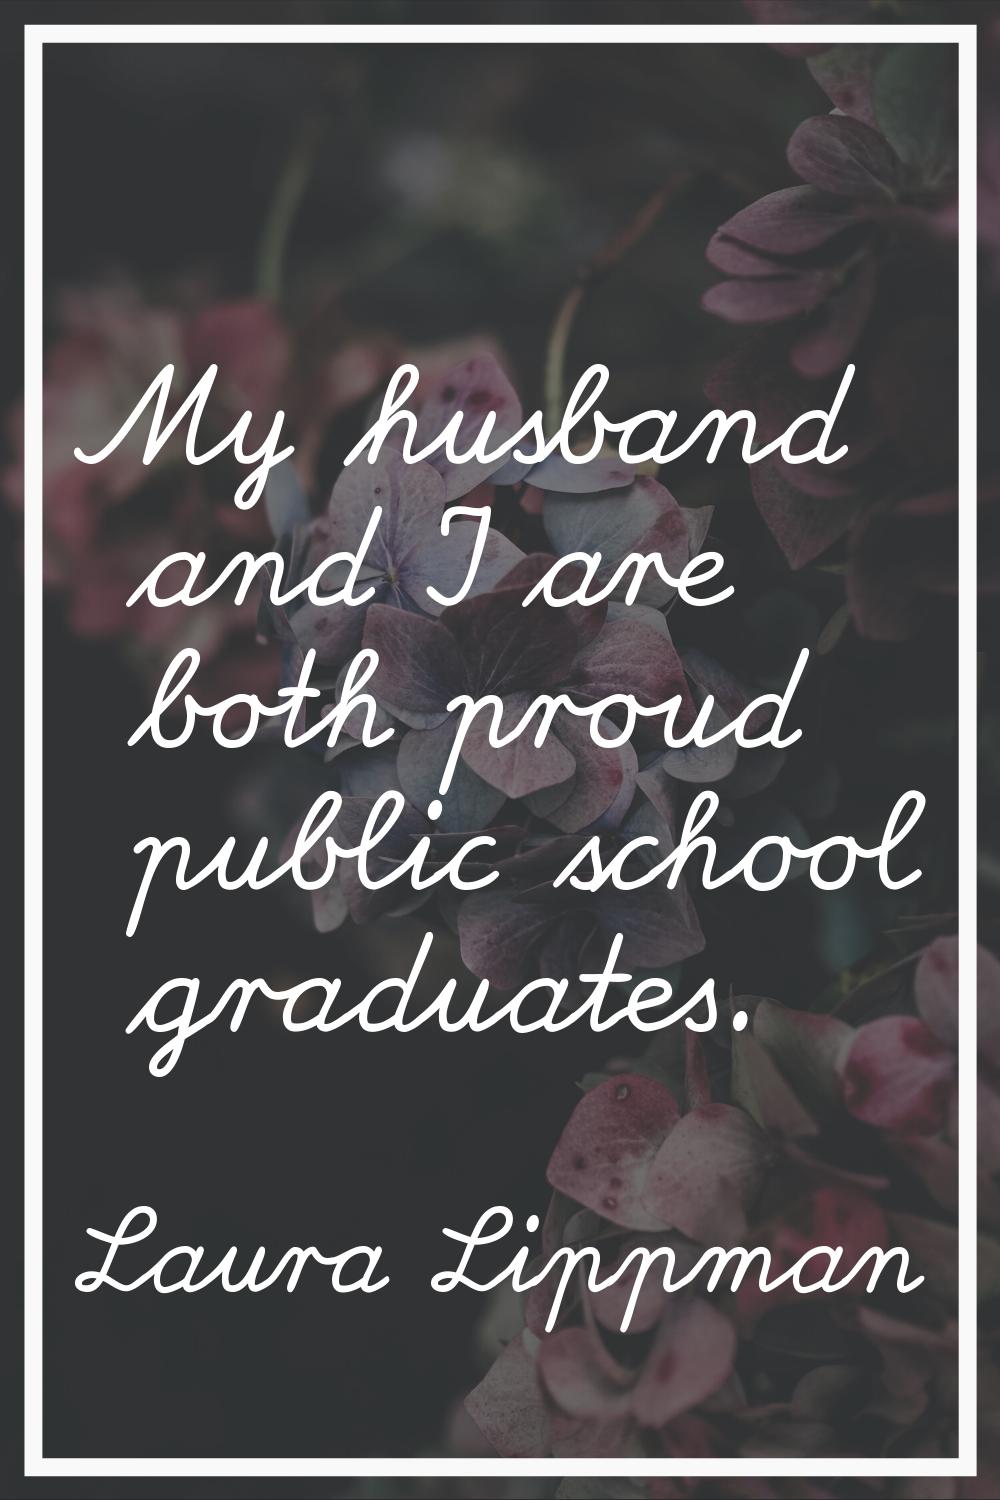 My husband and I are both proud public school graduates.